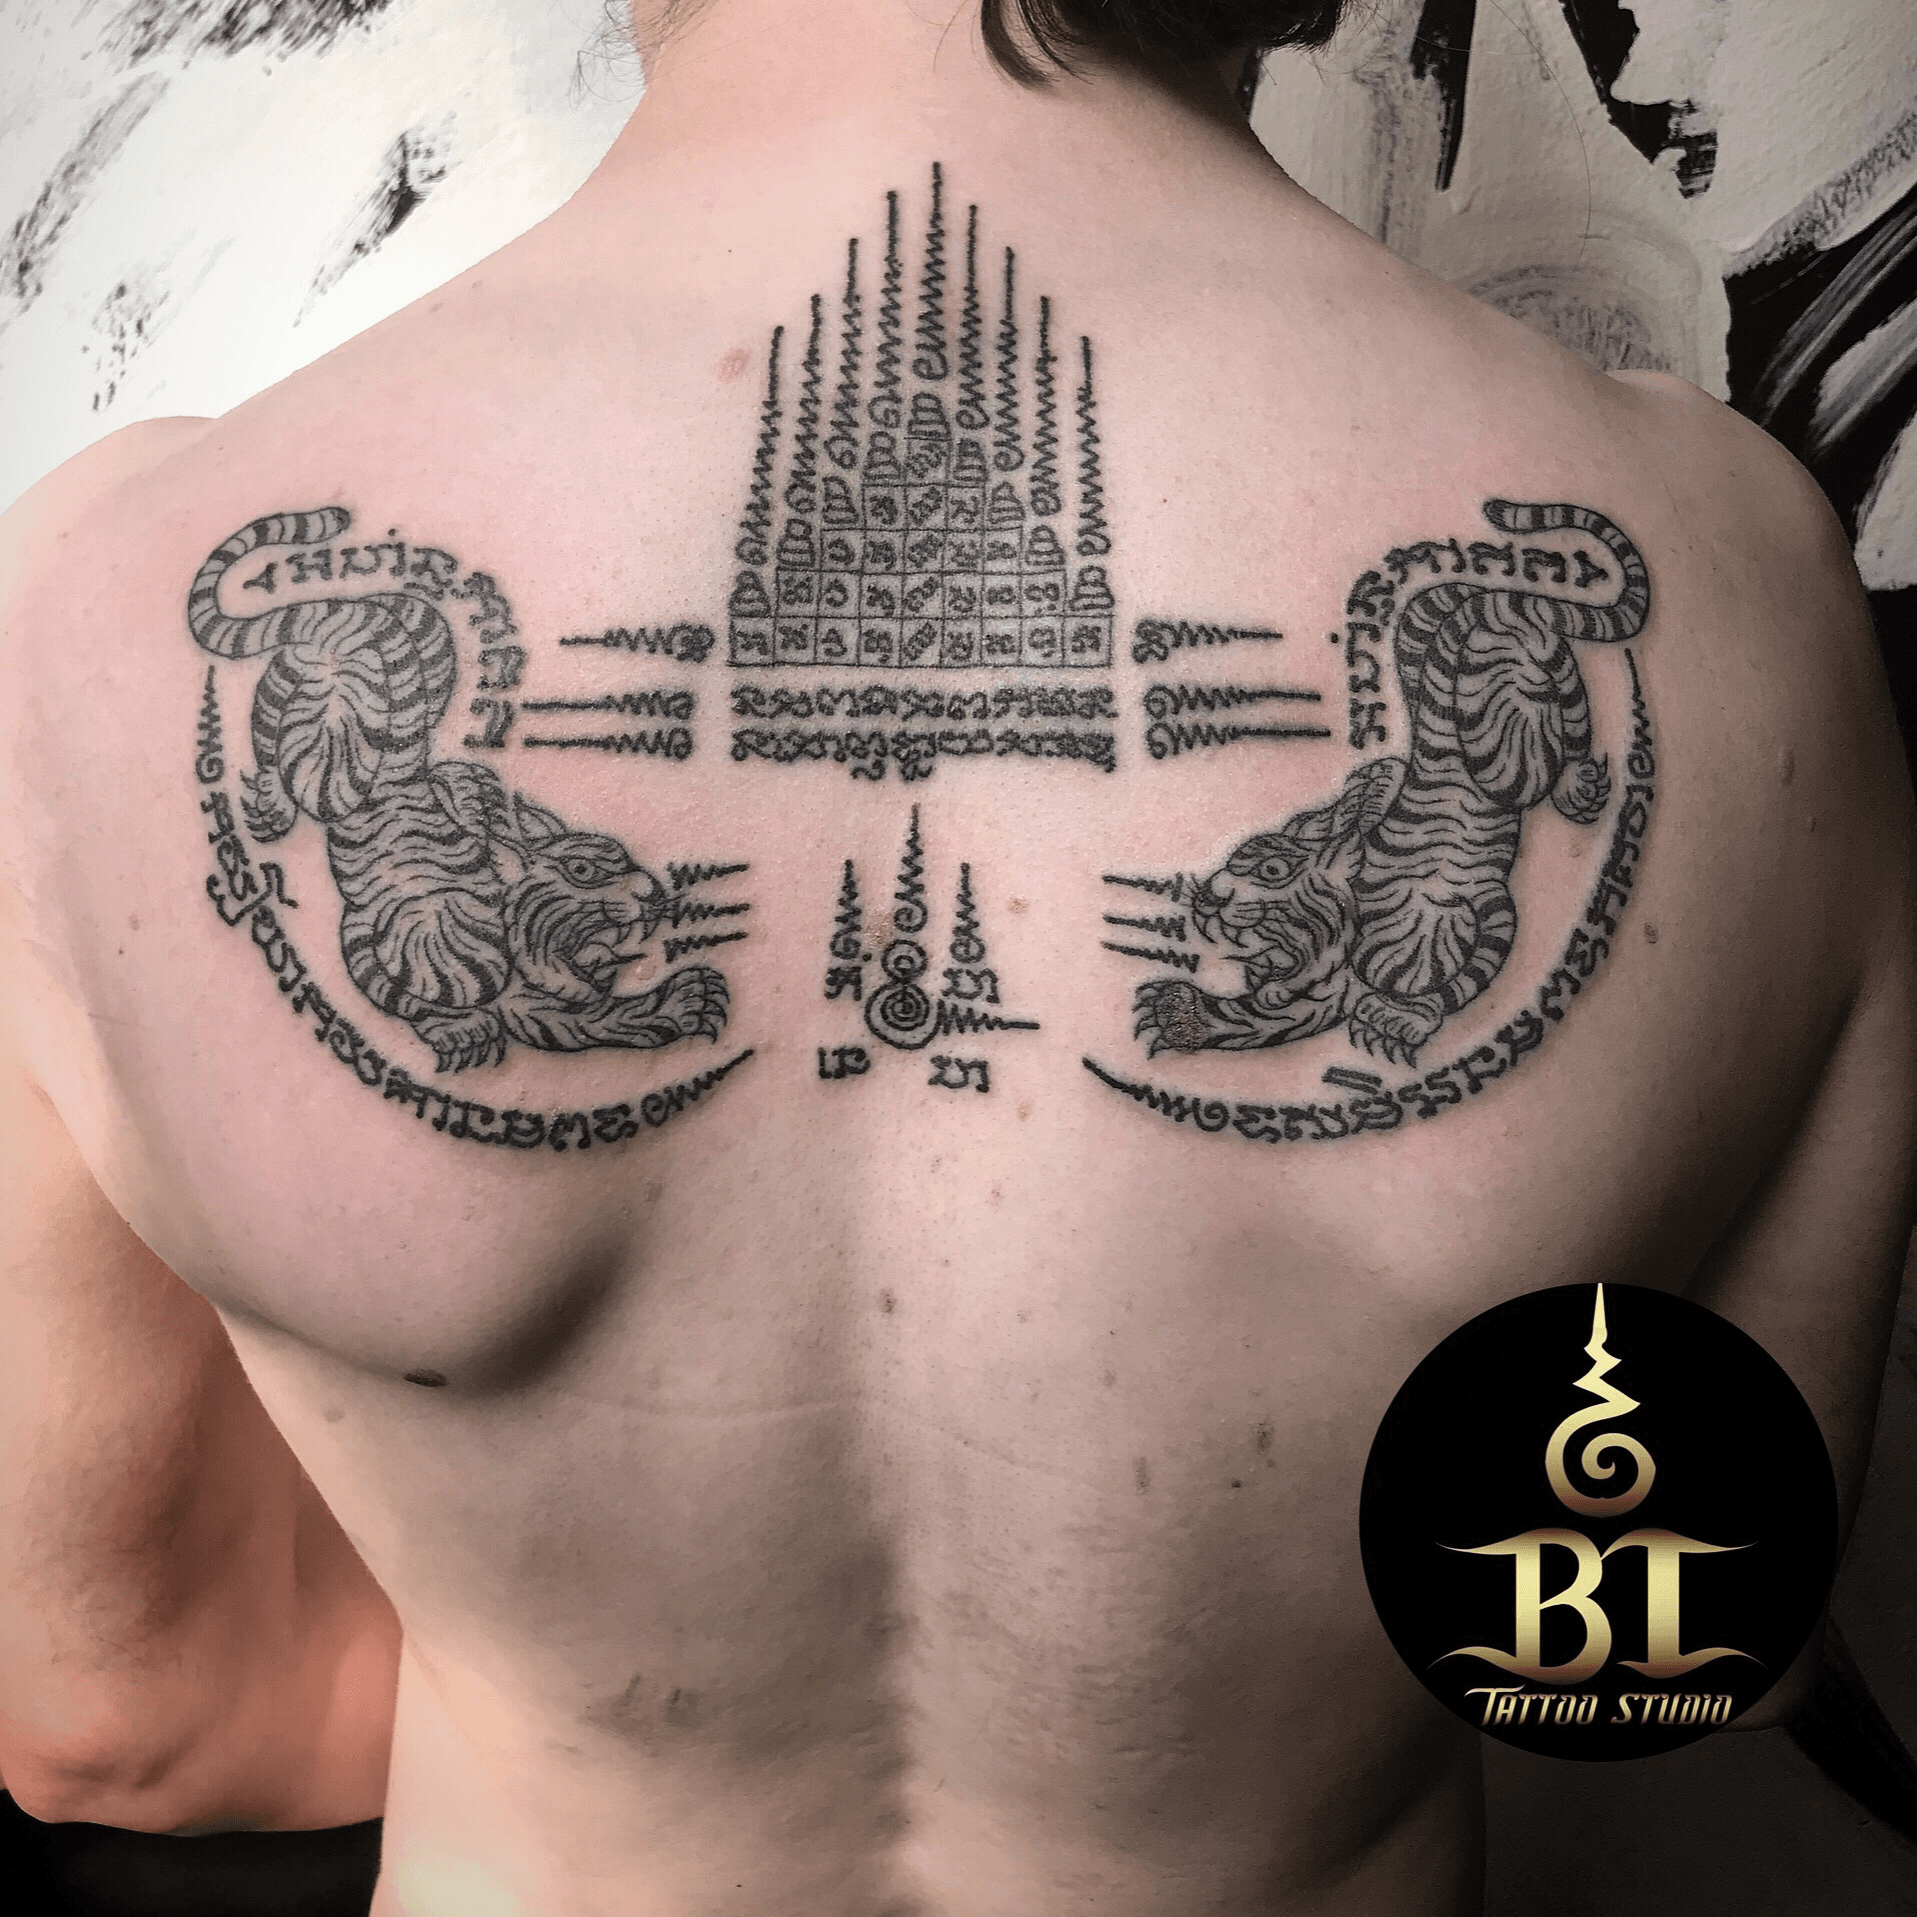 Tattoo uploaded by BT Tattoo Thailand • Done traditional Thai sak yant  tattoo by Ajarn Ta() #bttattoo #bttattoothailand  #thaitattoo #sakyant #sakyanttattoo #thaibambootattoo #thaibamboo # bambootattoo #bambootattoothailand ...